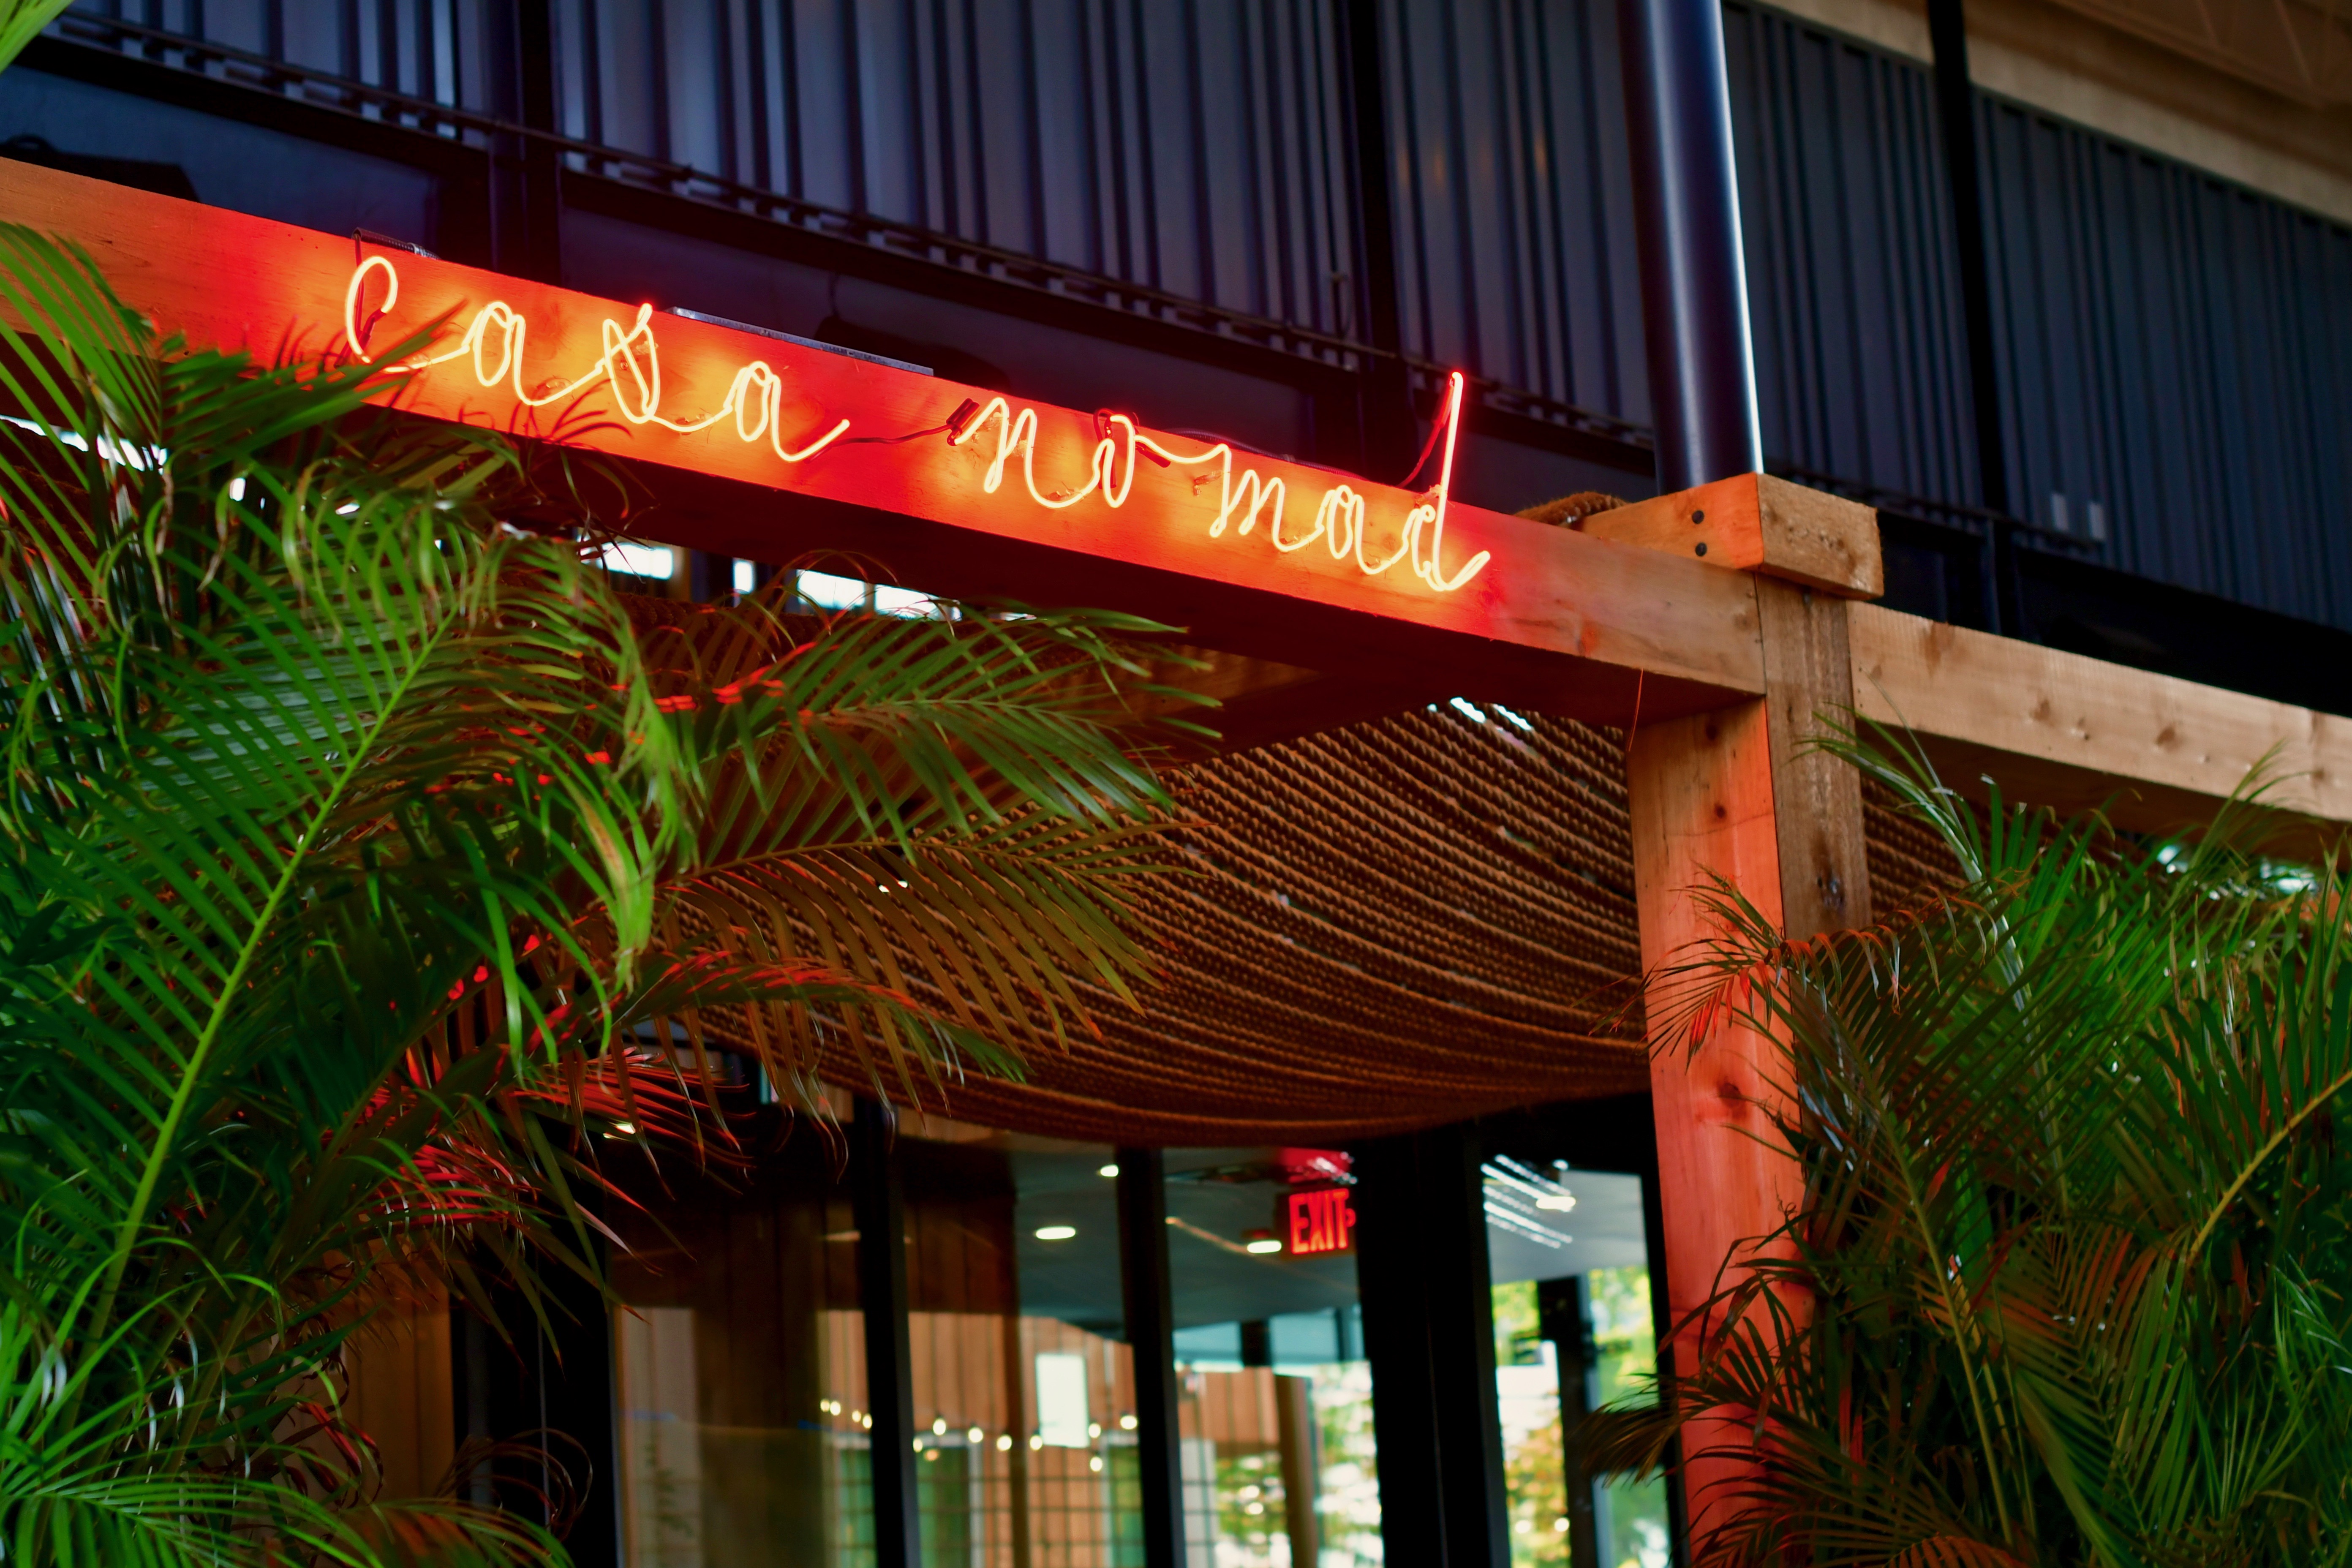 Casa Nomad  Restaurants in Houston, TX